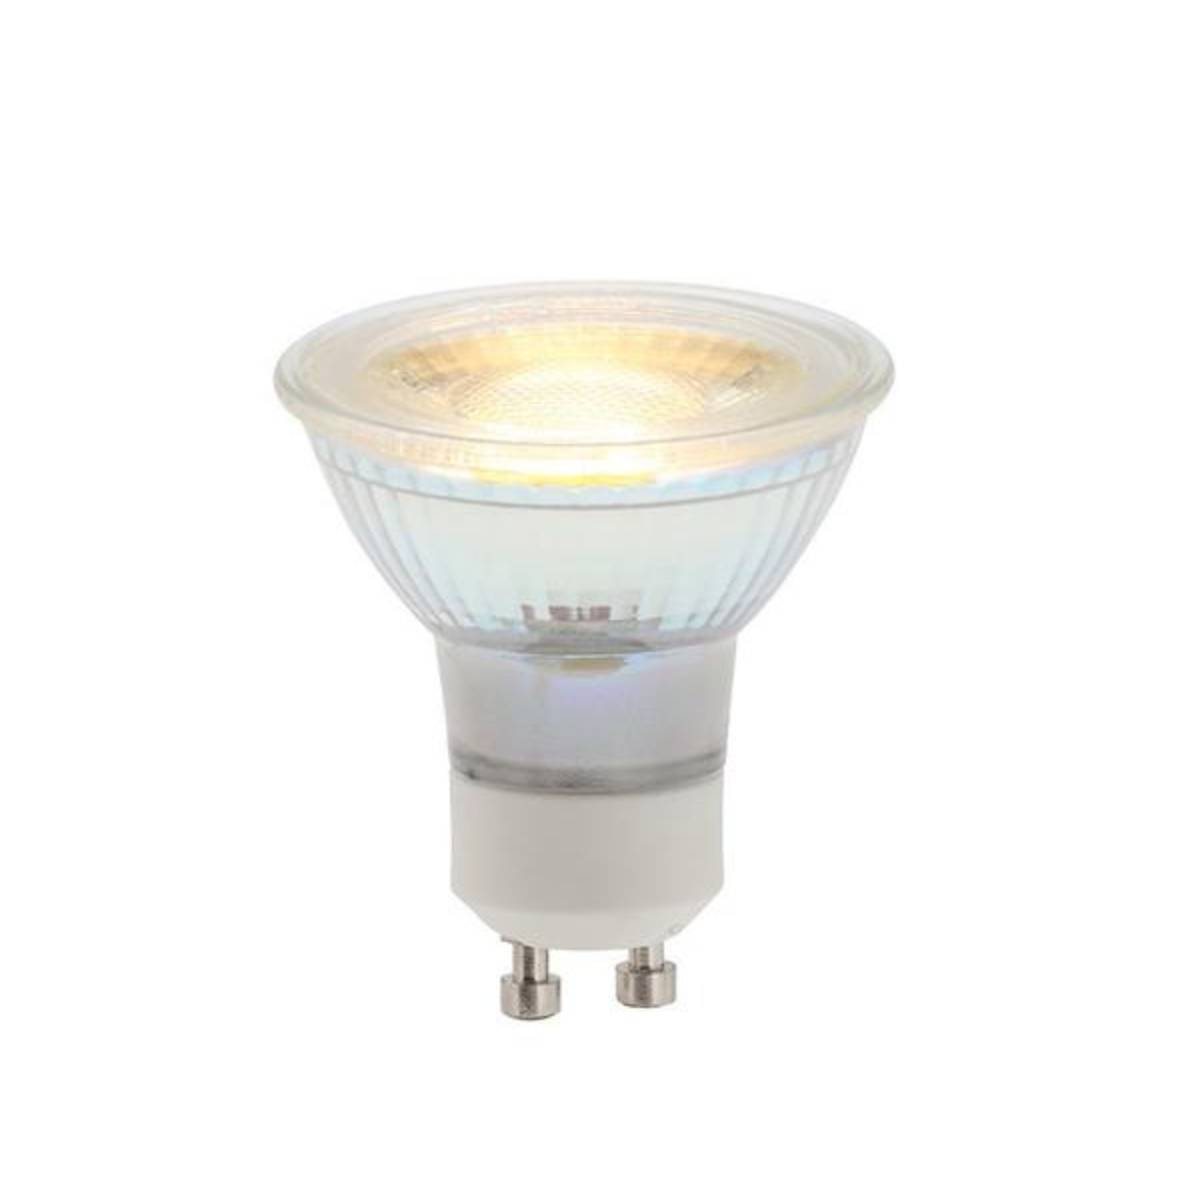 Forum Inlight INL-34151-3K GU10 Dimmable 3000k LED Bulb (12012)